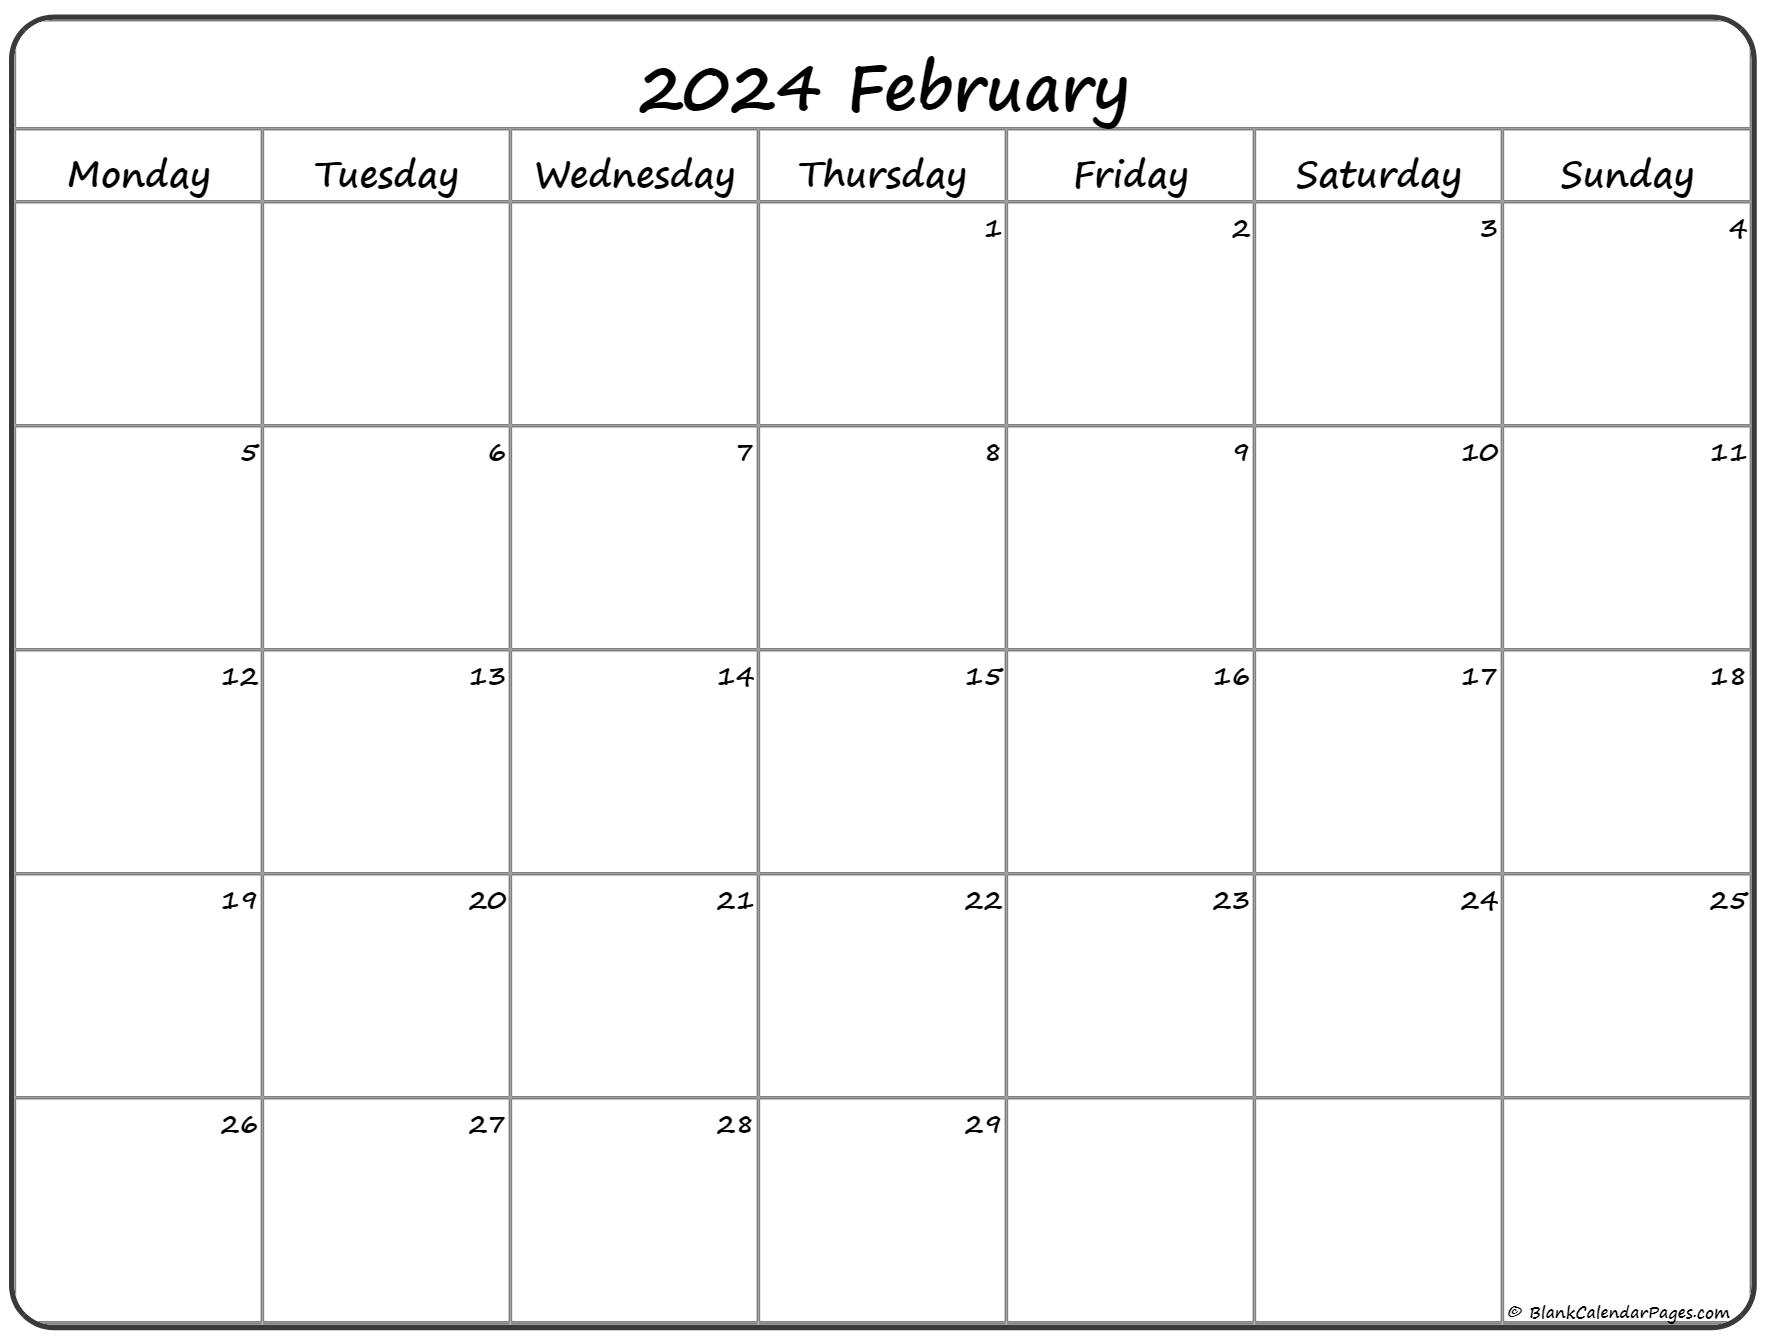 February 2024 Monday Calendar | Monday to Sunday